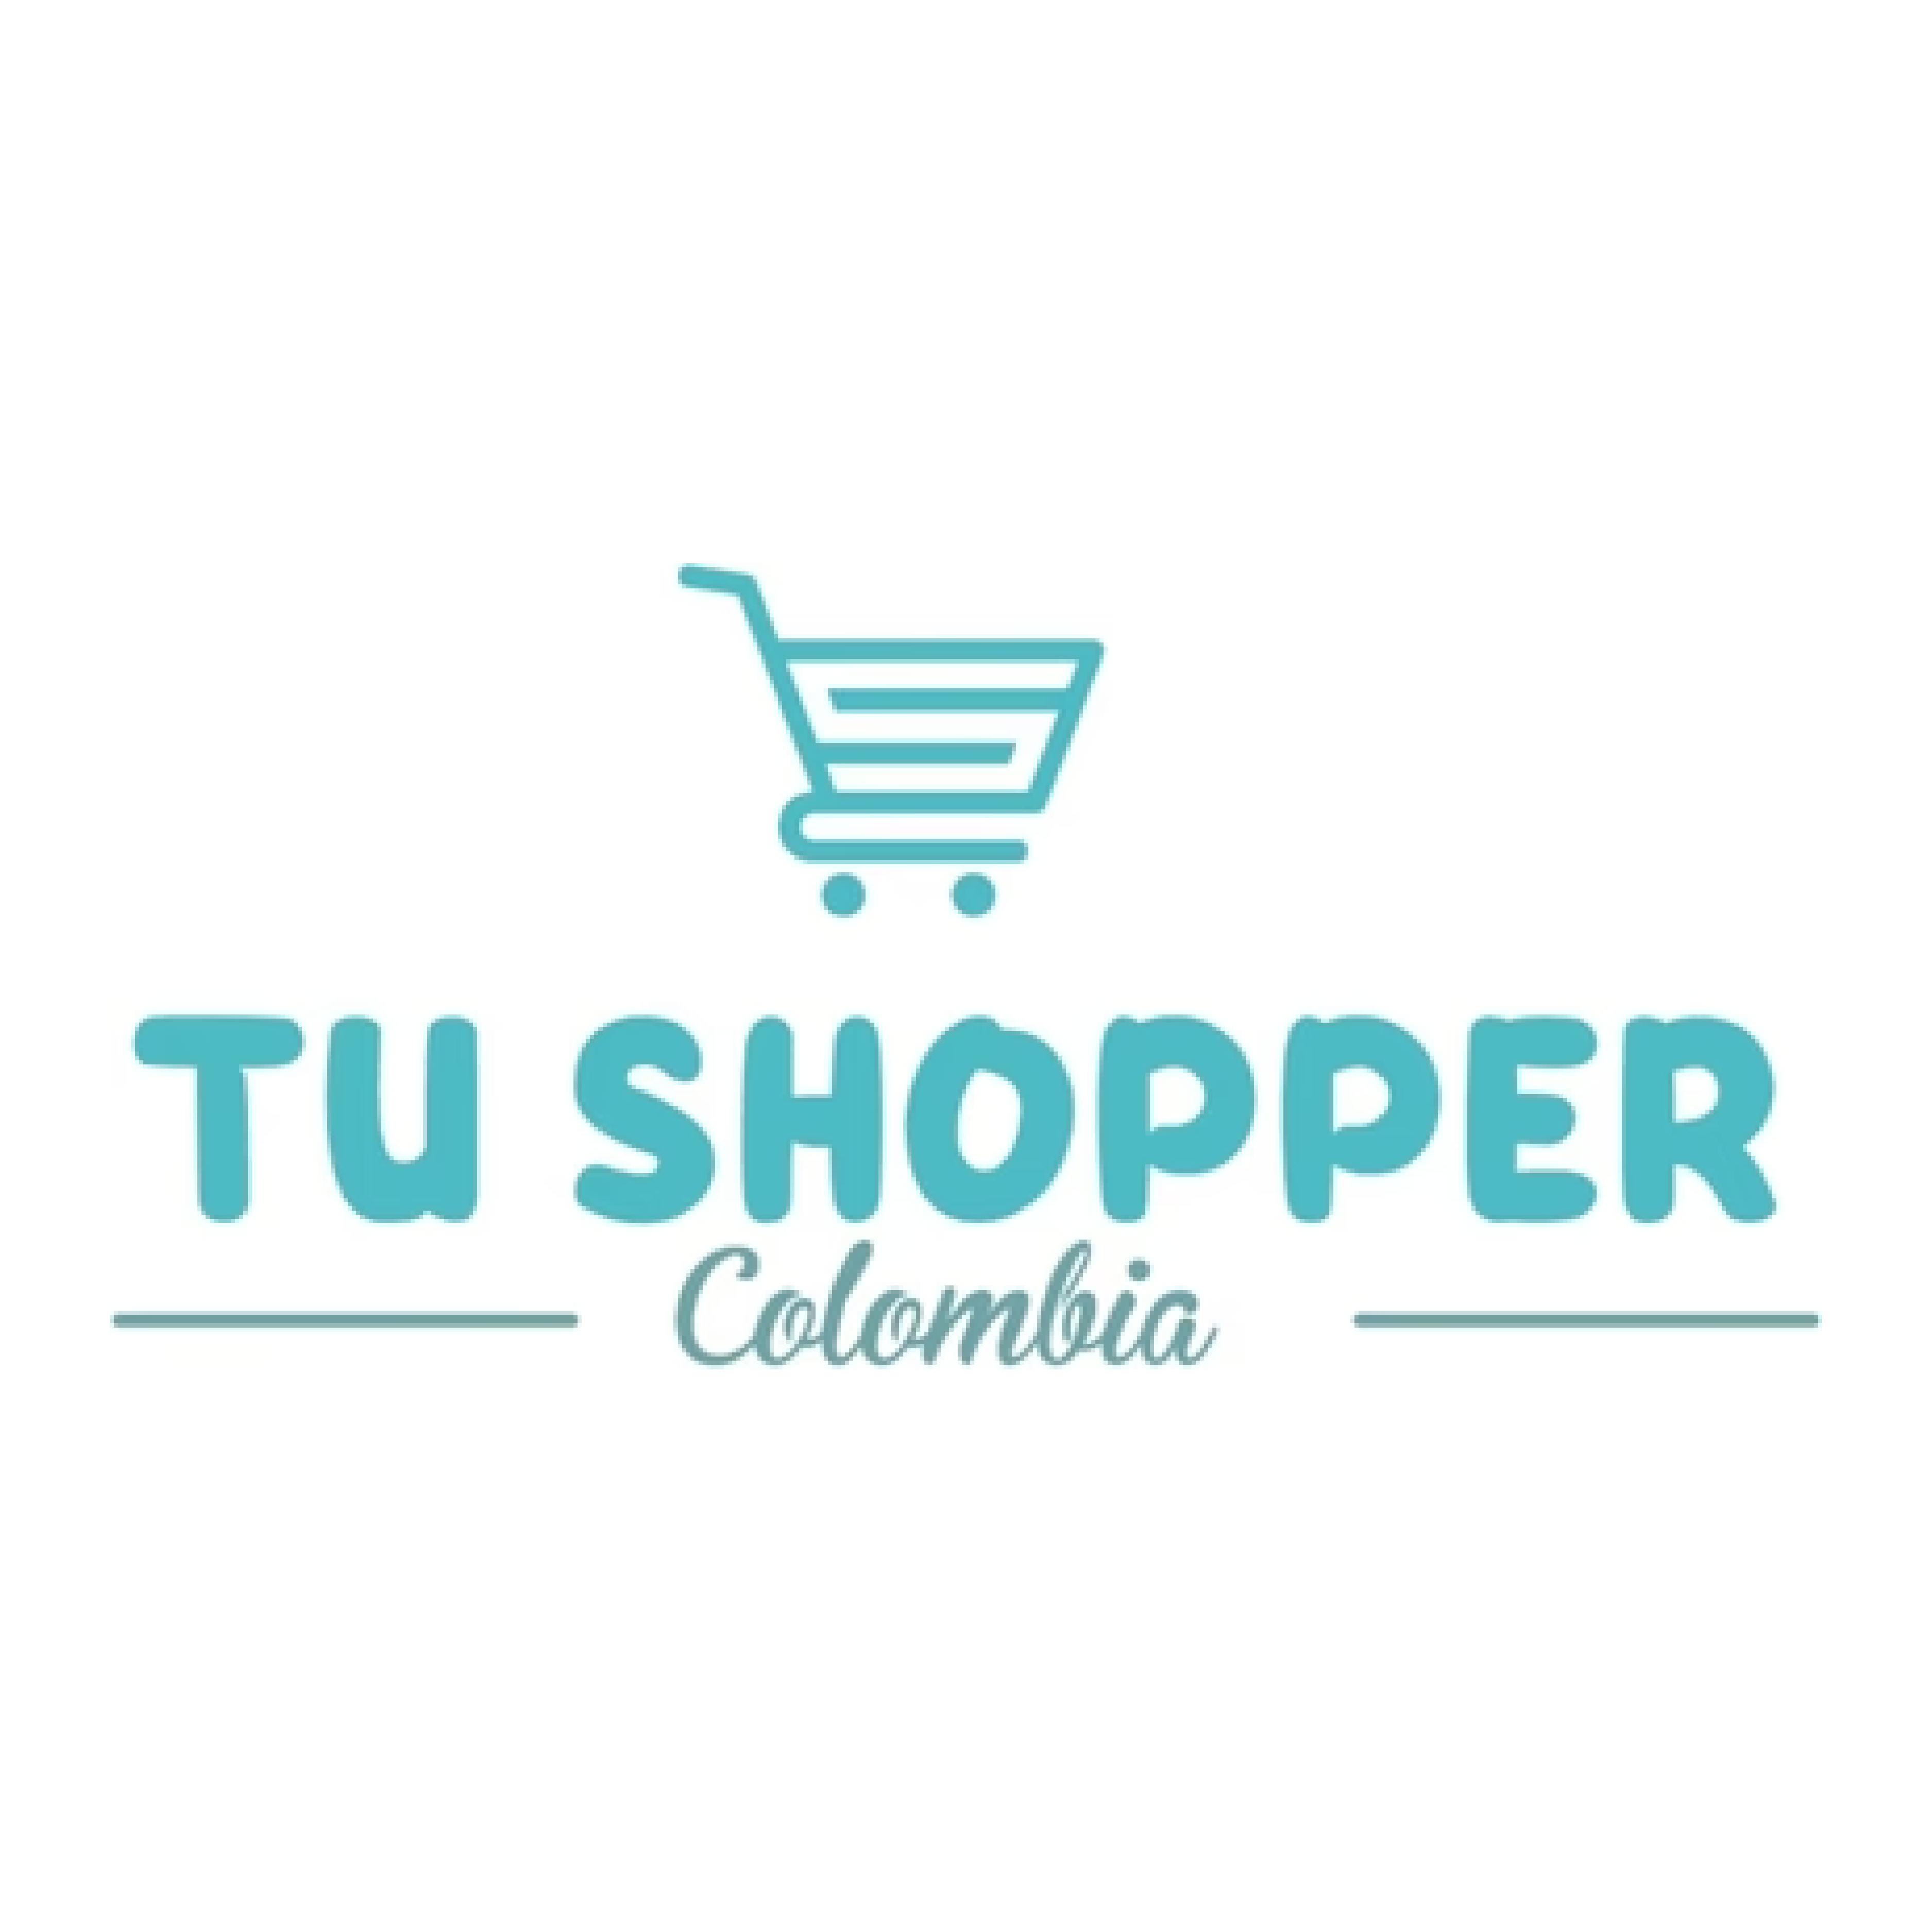 Tú Shopper Colombia